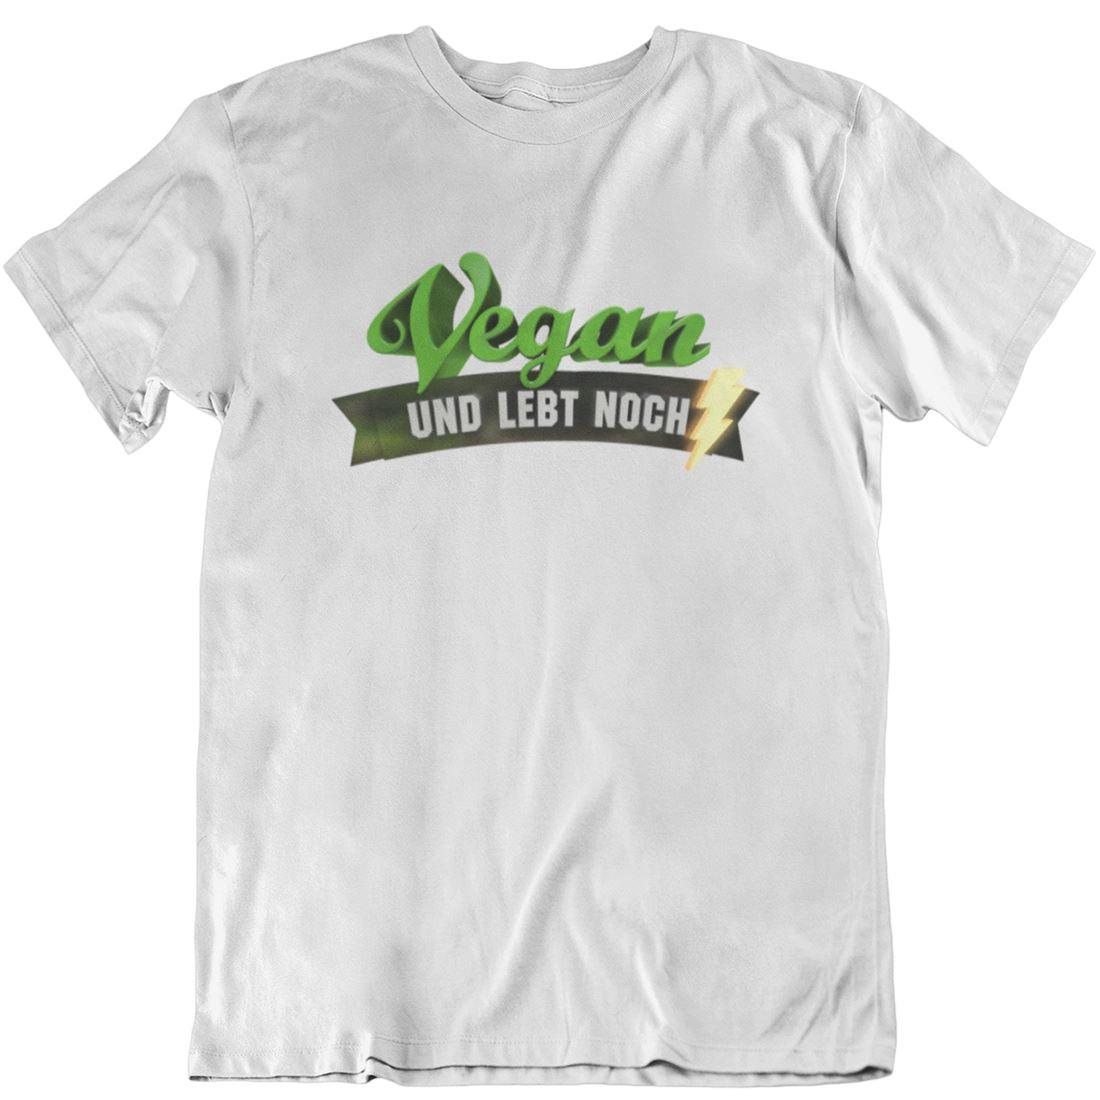 Vegan und lebt noch [v-reena] - Unisex Organic Shirt Rocker T-Shirt ST/ST Shirtee White S 